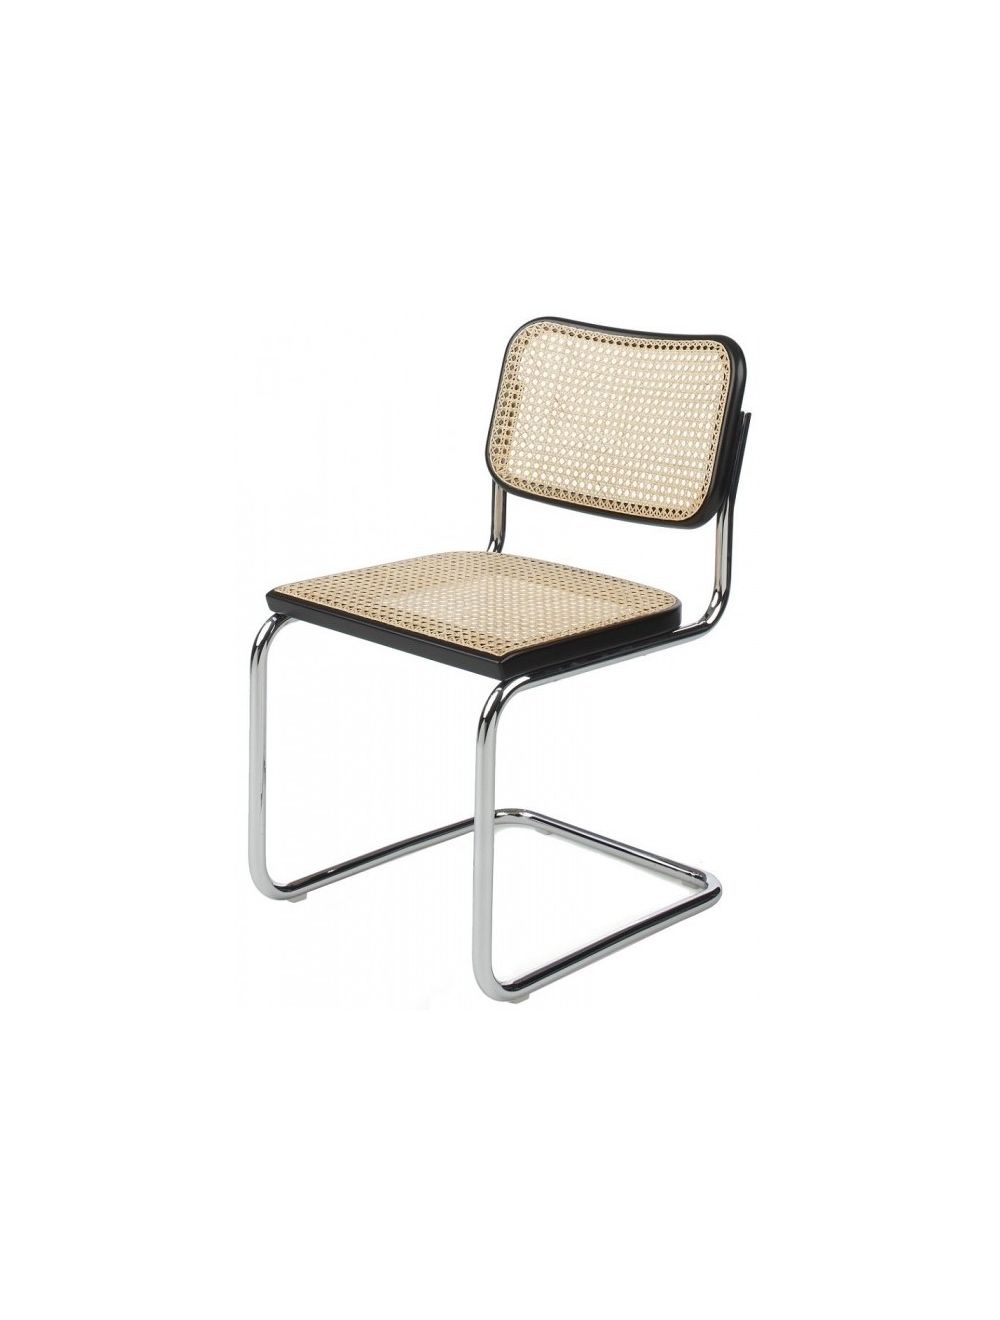 Onvoorziene omstandigheden cruise keten Chair Cesca Breuer Seat Wood And Metal Frame SedieDesign.it - Sales Online  @ SedieDesign Russia